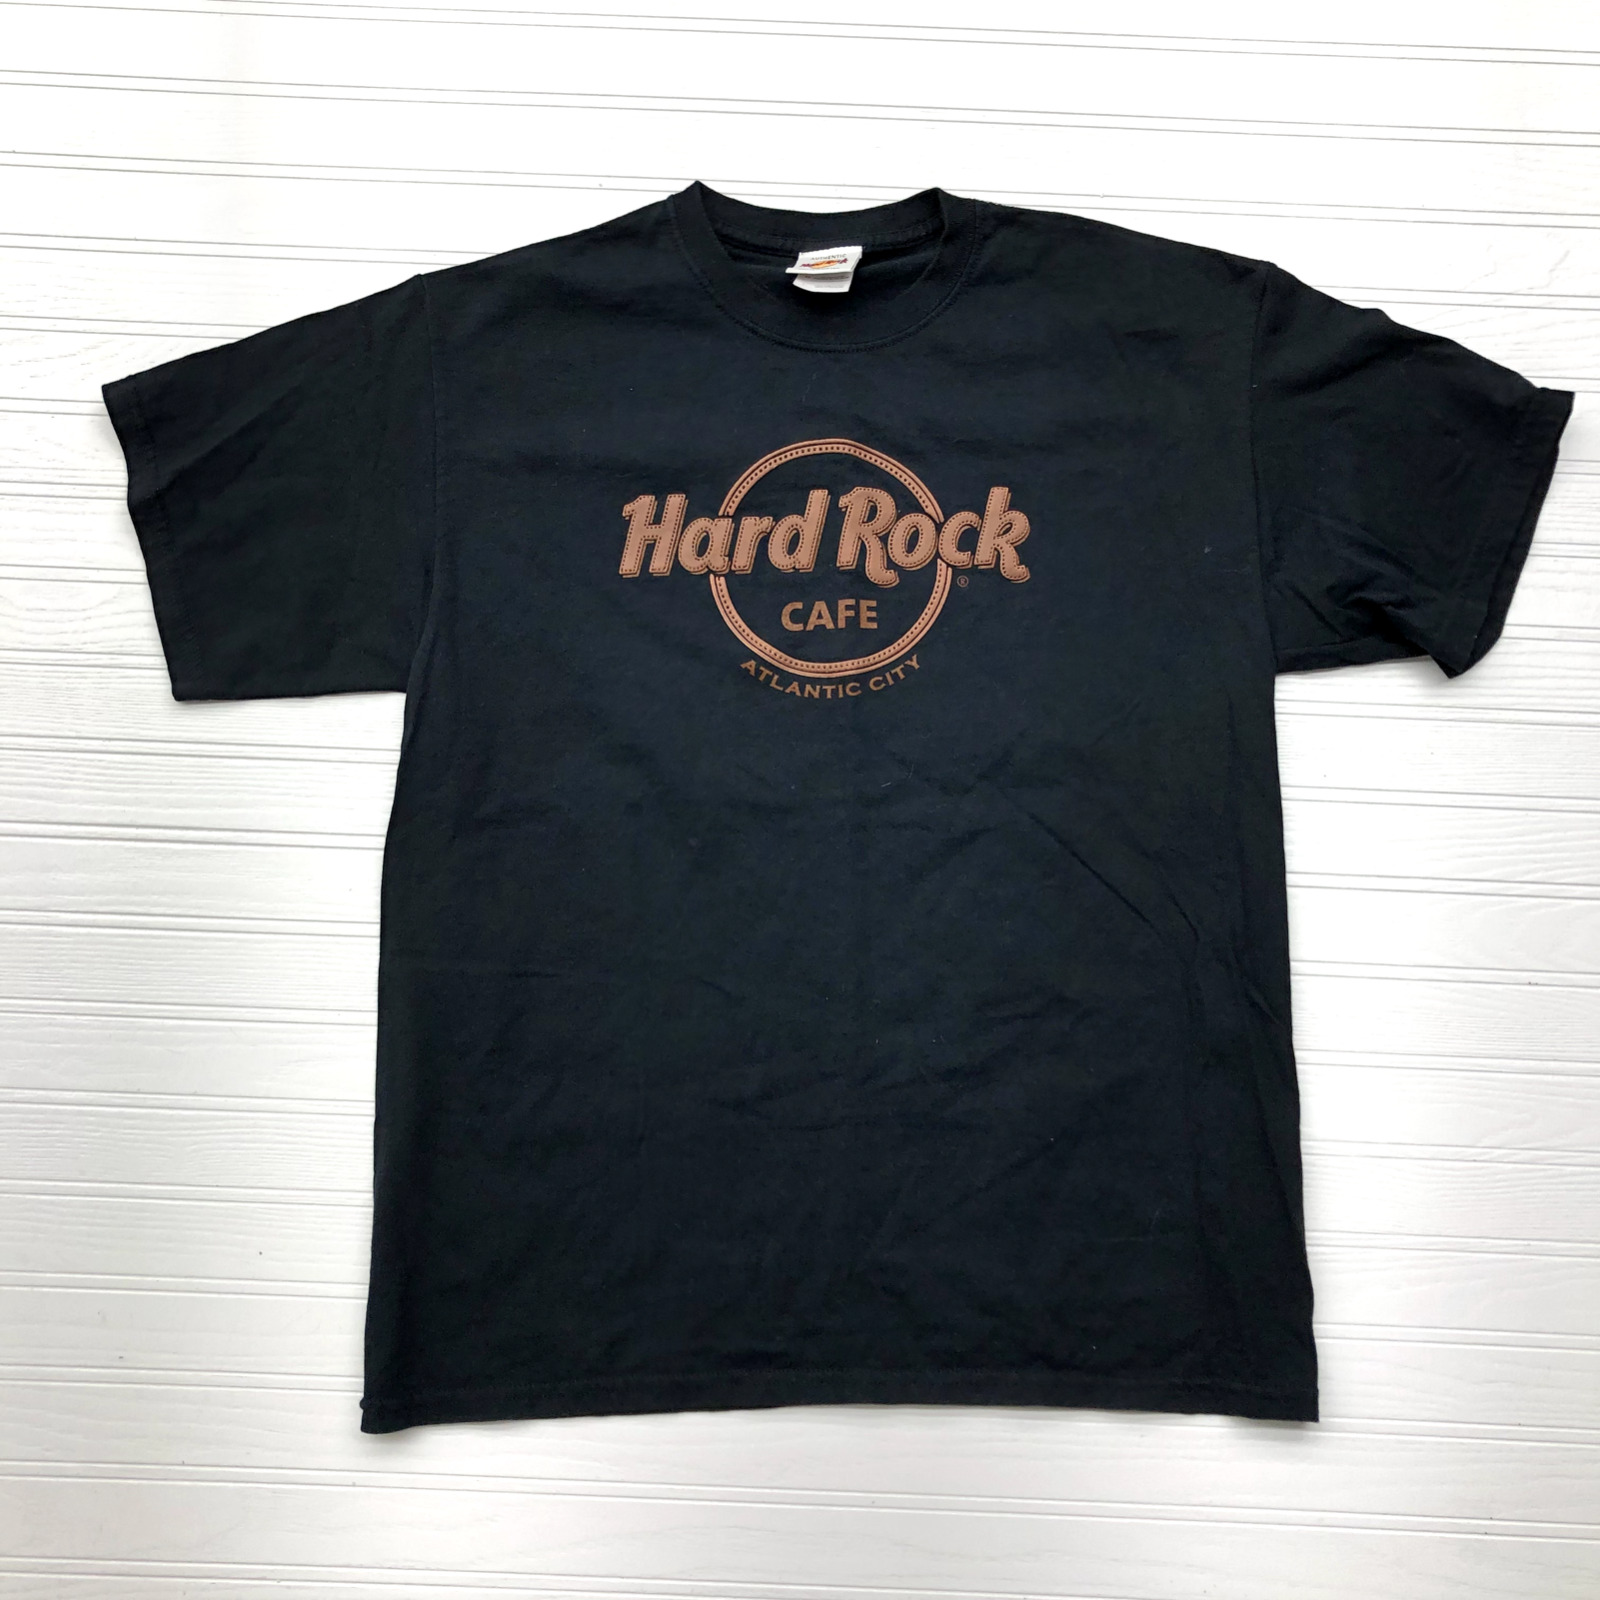 Hard Rock Cafe Black Graphic Atlantic City Short Sleeve T-shirt Adult Size L